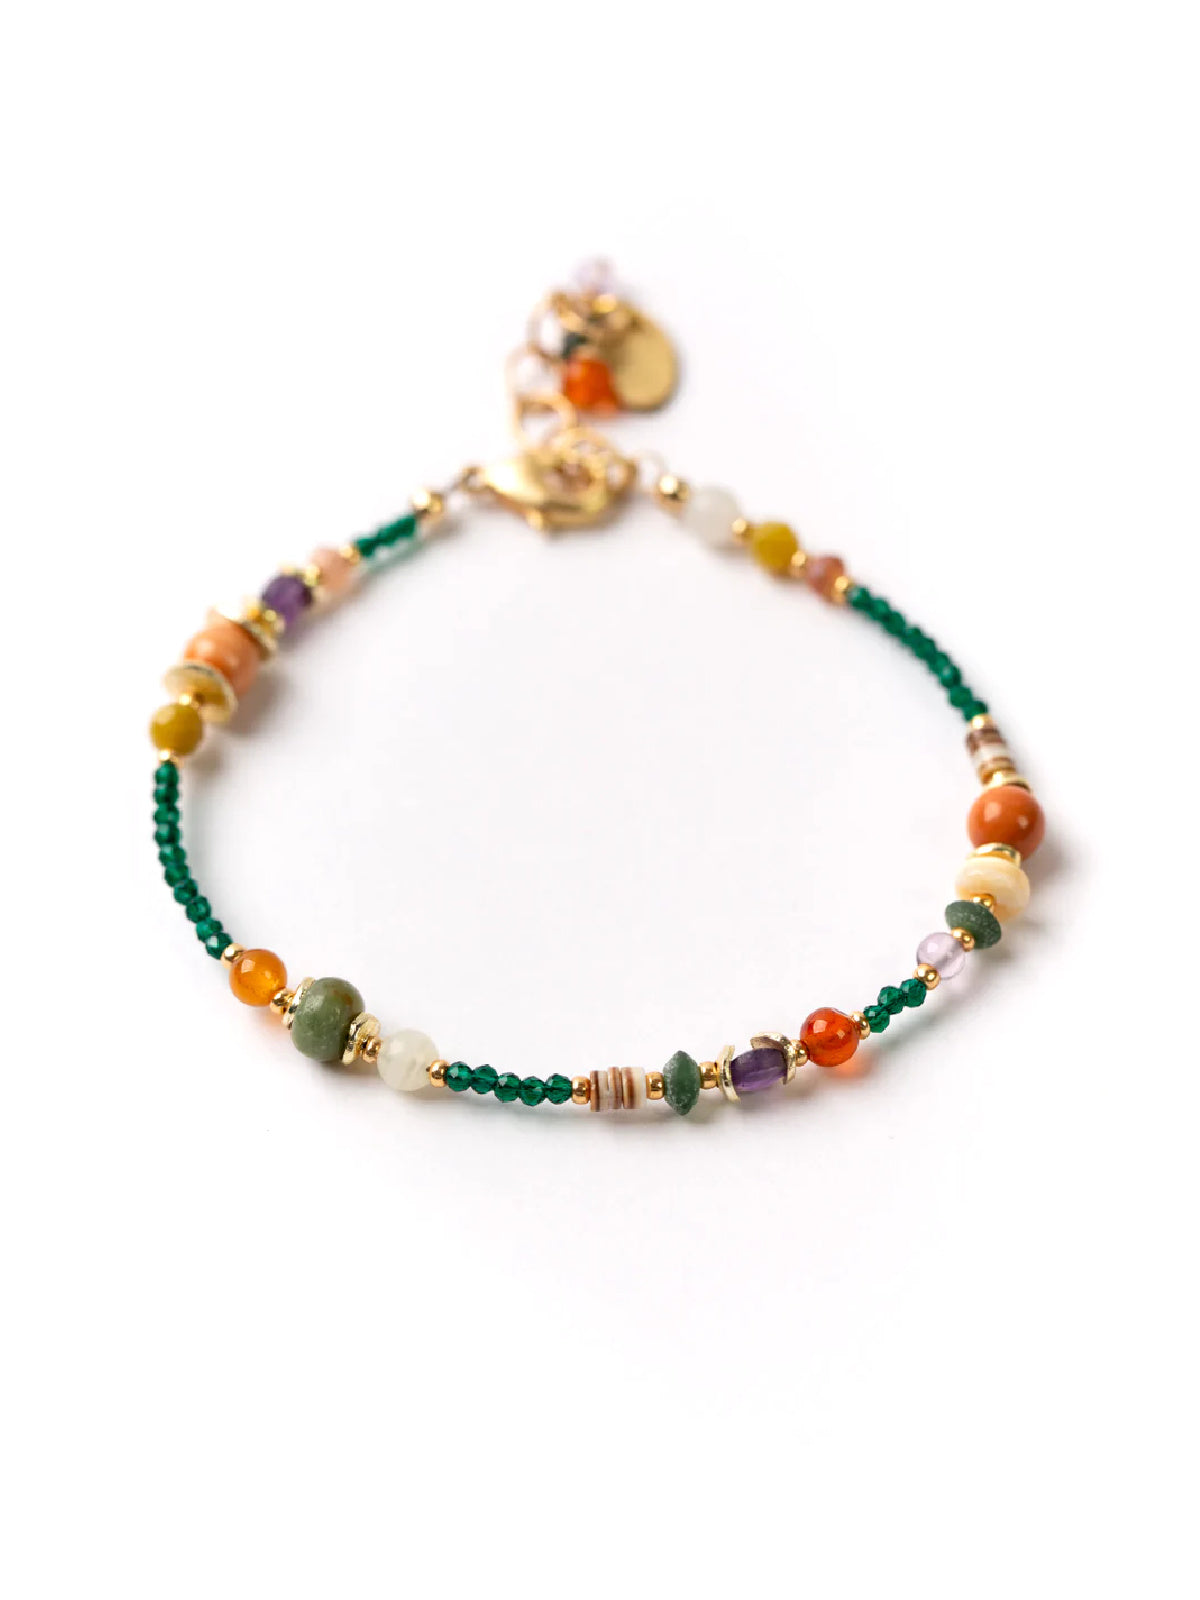 Bergamot Stone Collage Bracelet by Anne Vaughan | Light Years Jewelry